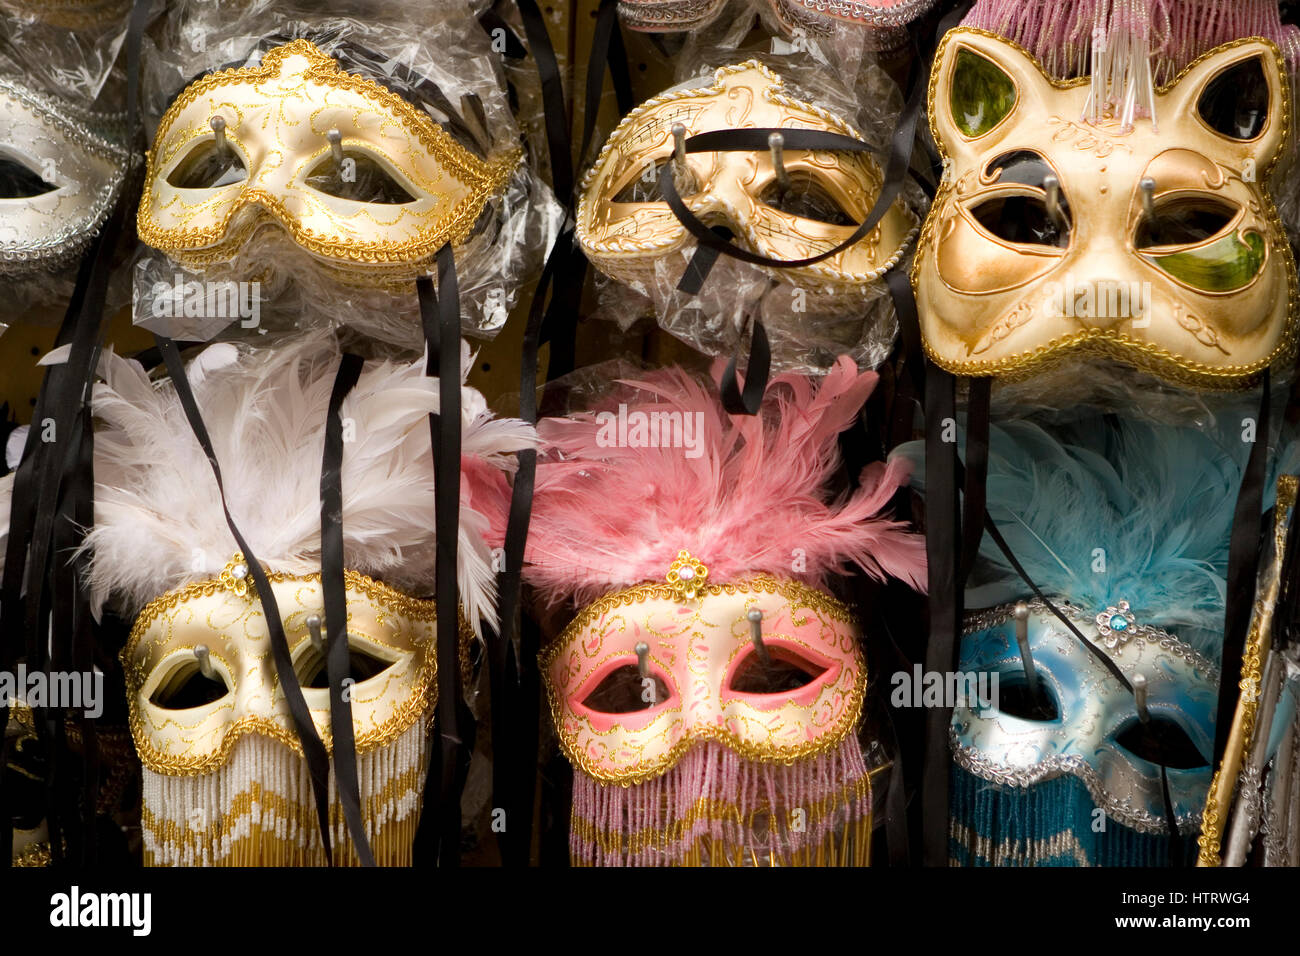 Masks from the Venetian Carnival in Venice Italy Stock Photo